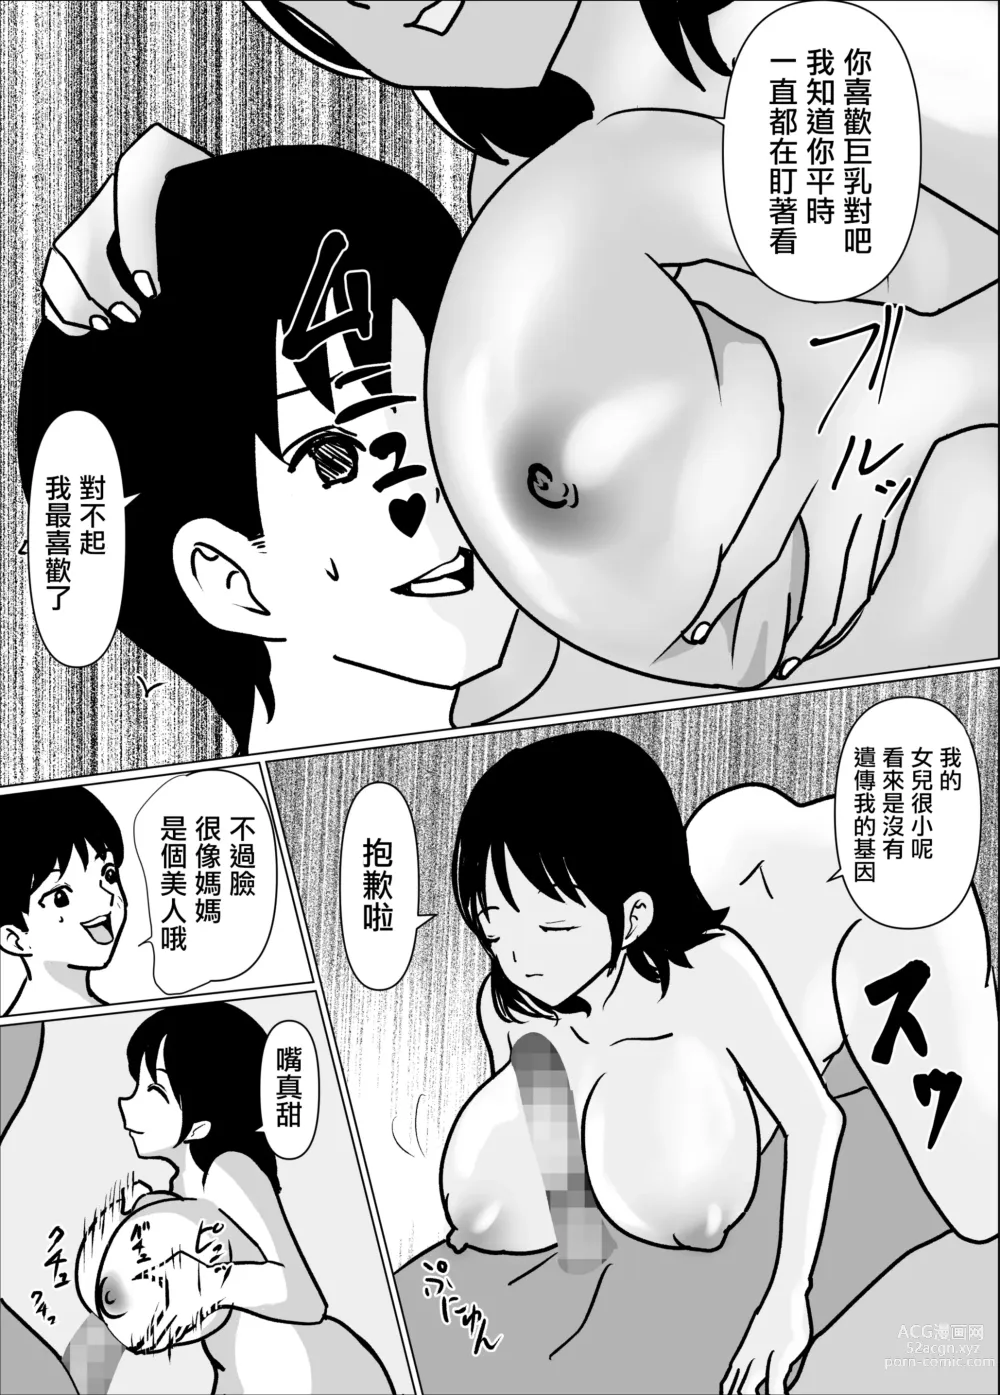 Page 16 of doujinshi 為了在妻子的排卵日授精而攢的精子被丈母娘看上了